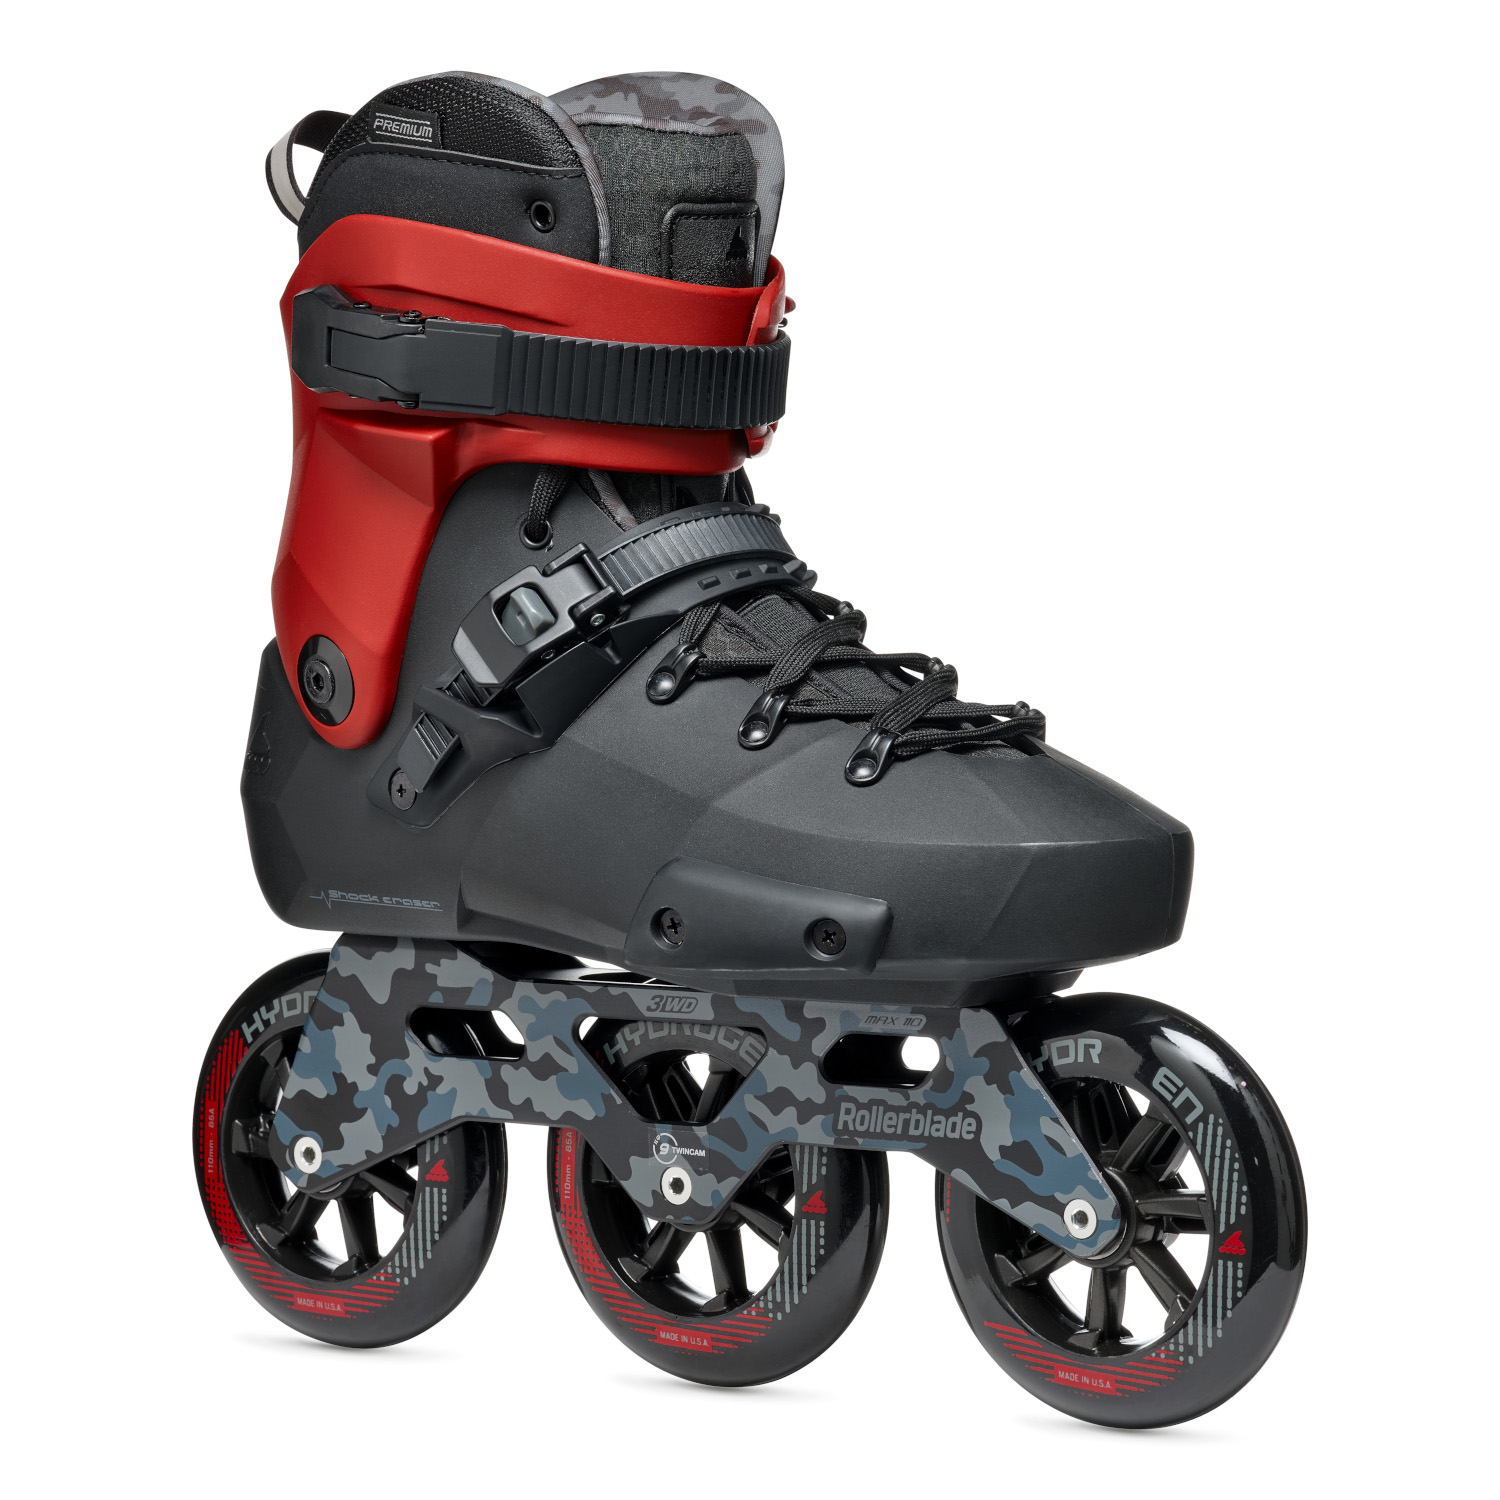 Productfoto van Rollerblade Twister 110 - Urban Inline Skates - zwart/rood